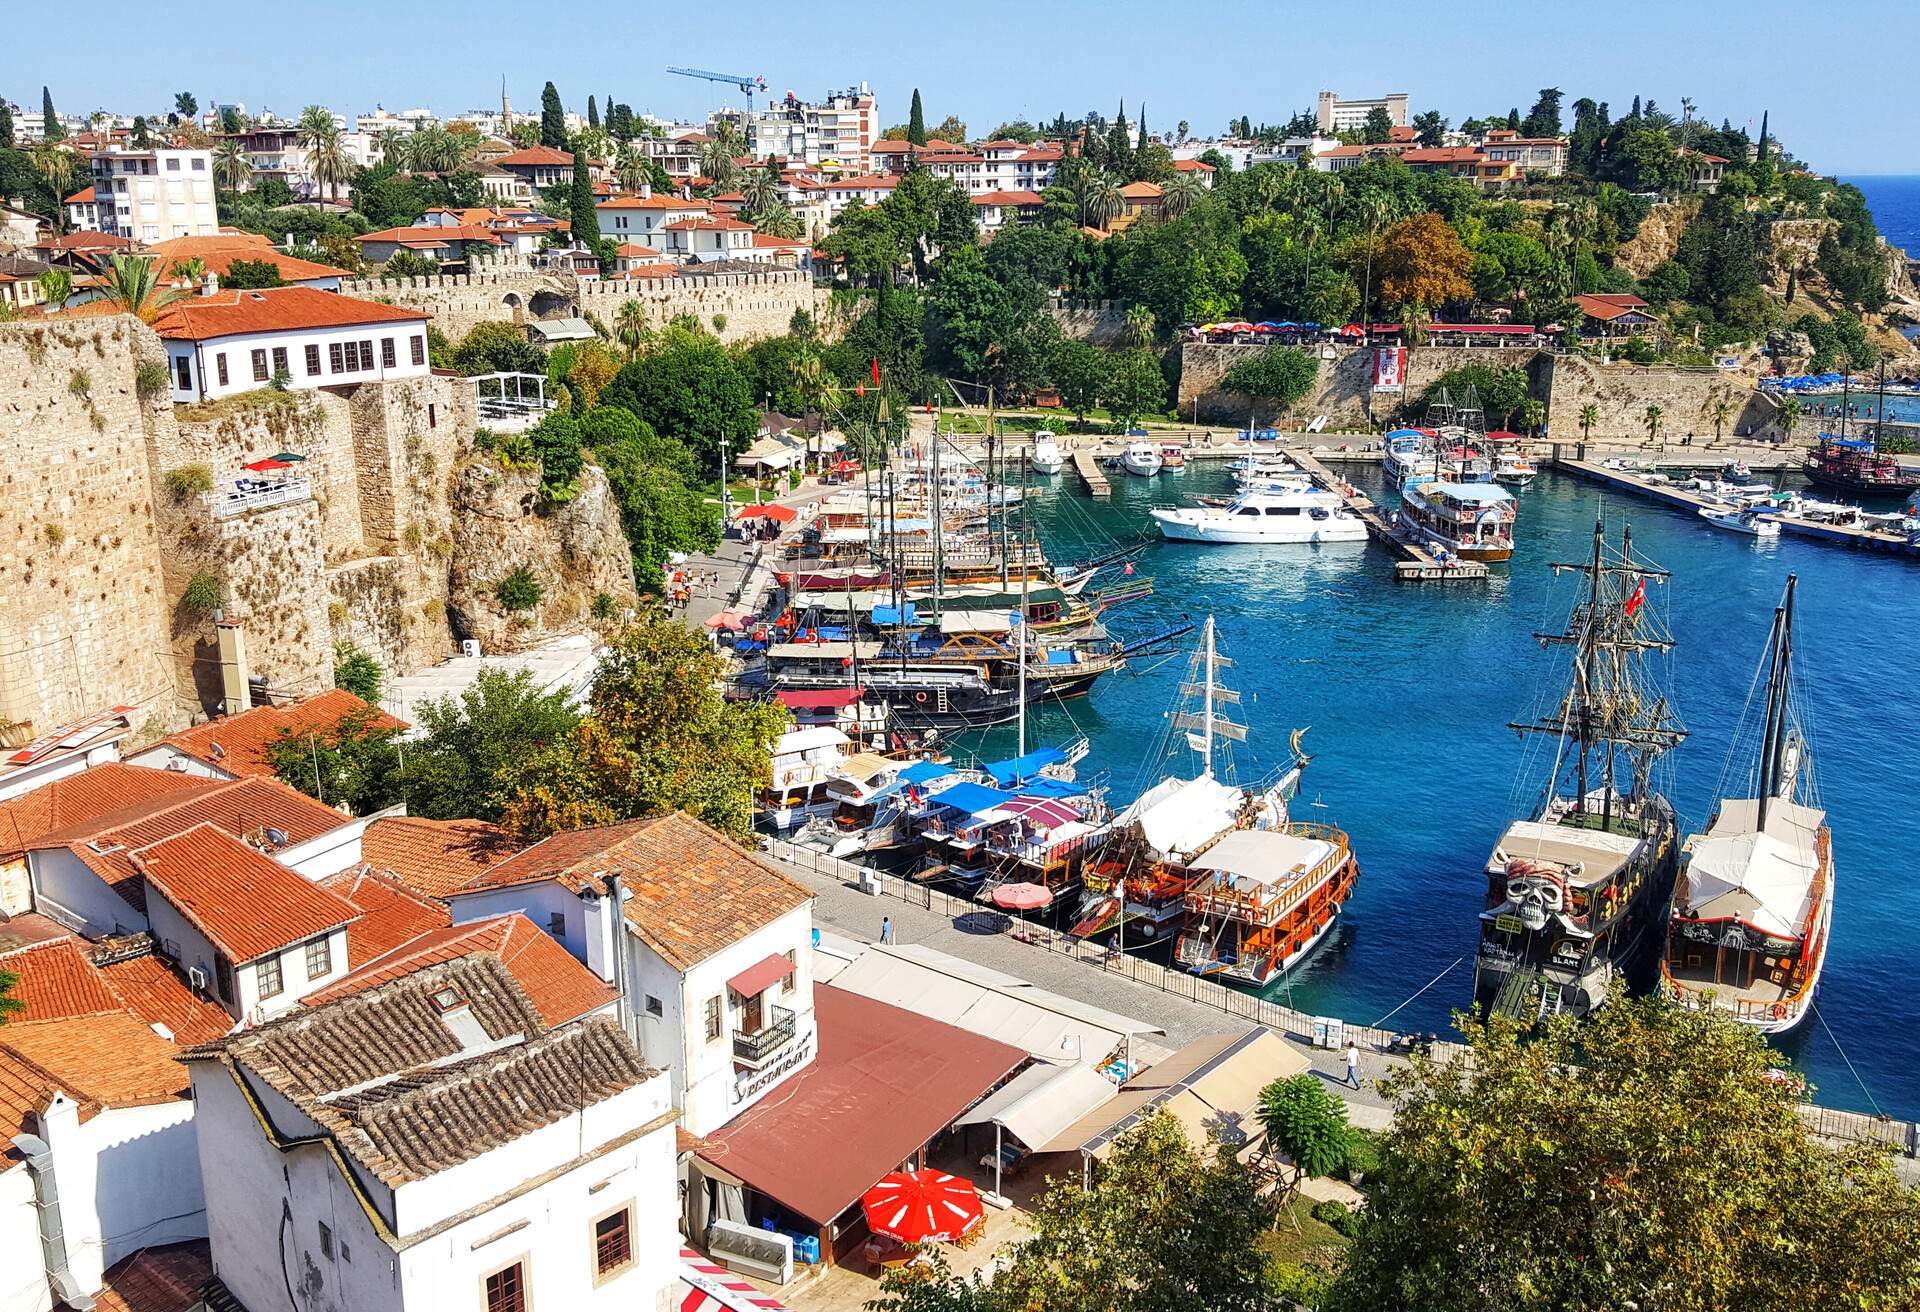 Harbor in the old town Kaleici of Antalya, Turkey